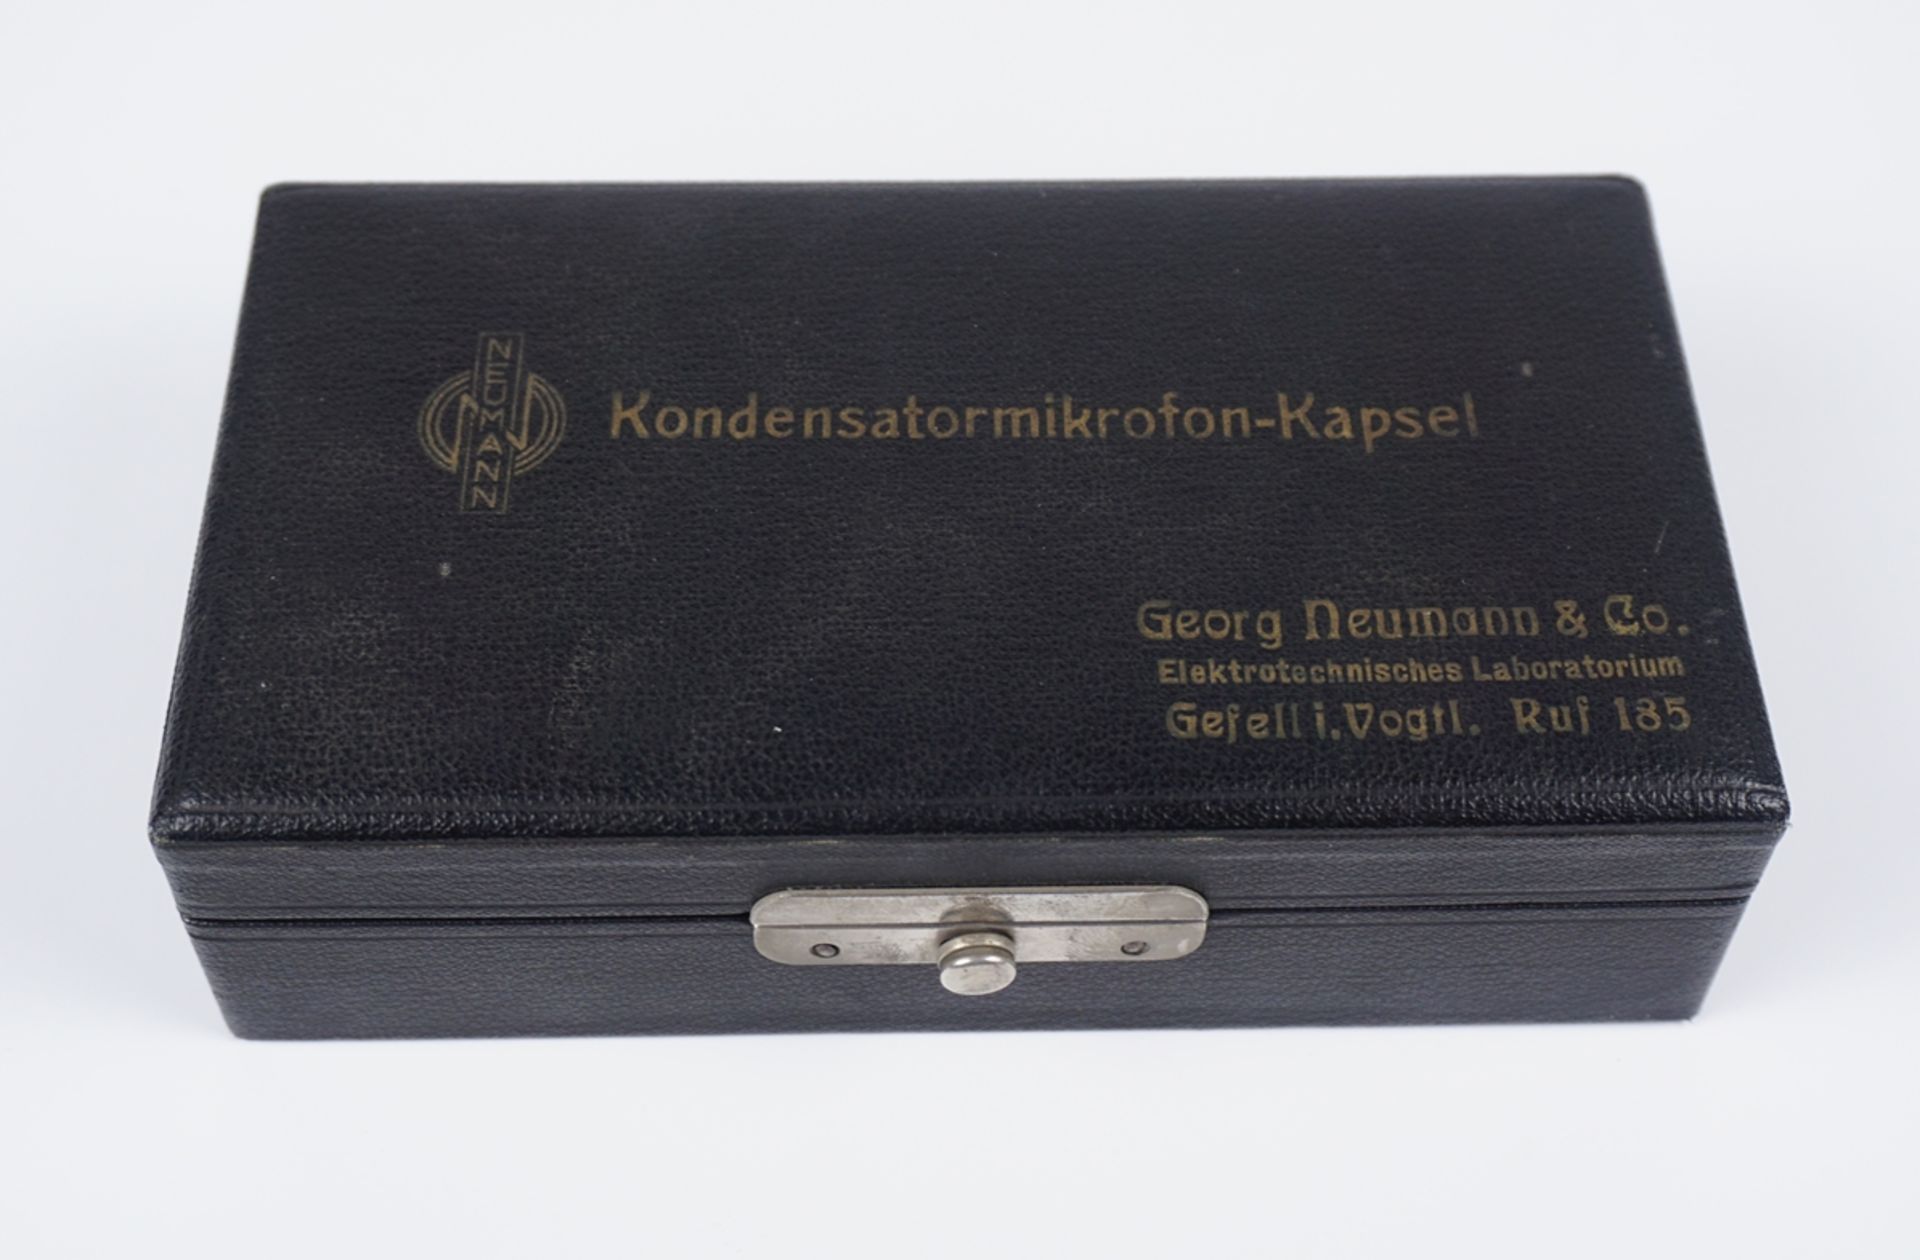 Kondensator-Mikrofonkapsel M 7, Georg Neumann&Co, Gefell/Vogland - Image 5 of 5